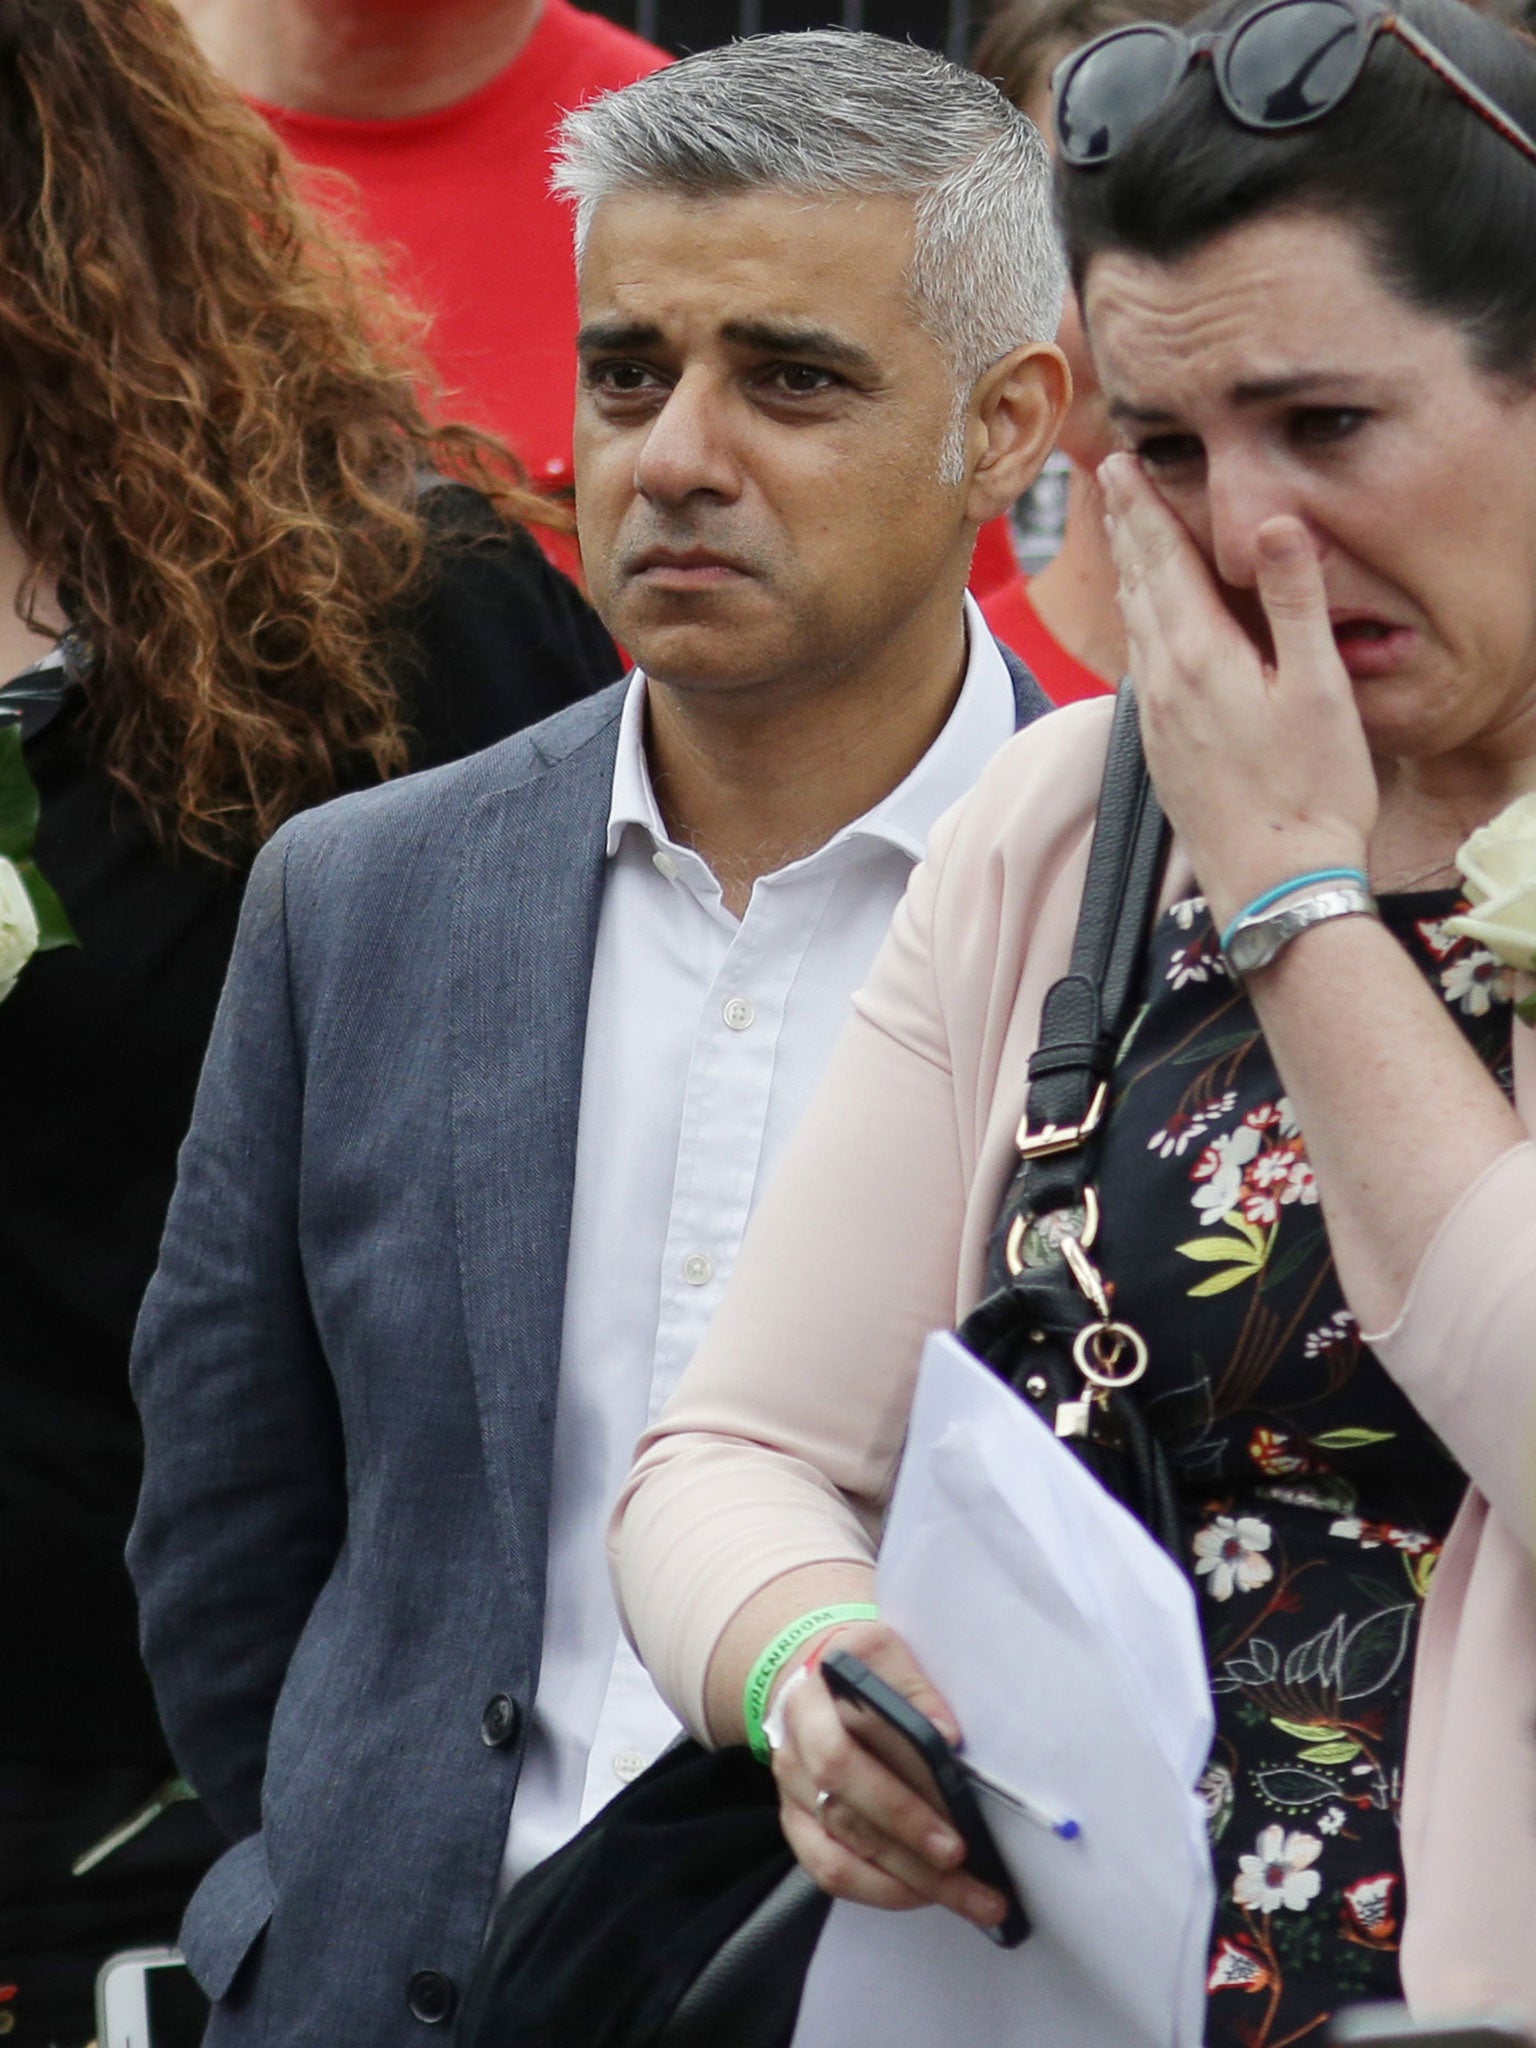 &#13;
Mayor of London Sadiq Khan listens as Brendan Cox addresses the rally in Trafalgar Square &#13;